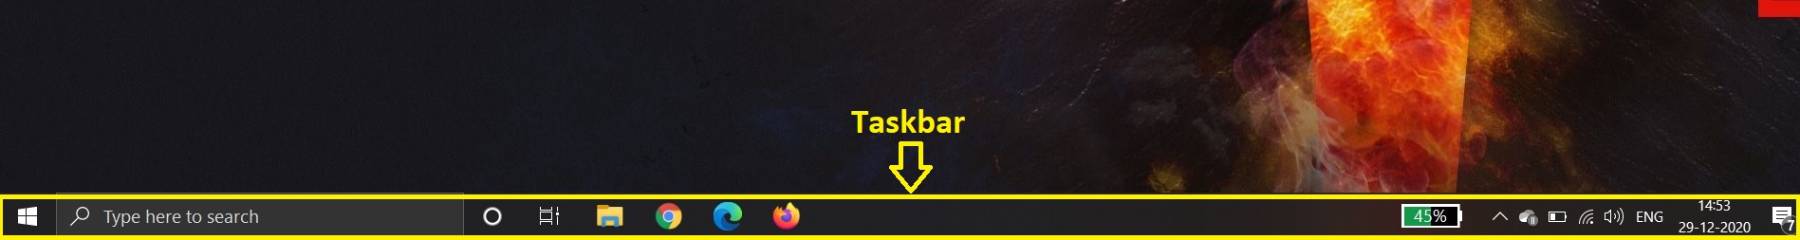 Customize Windows taskbar